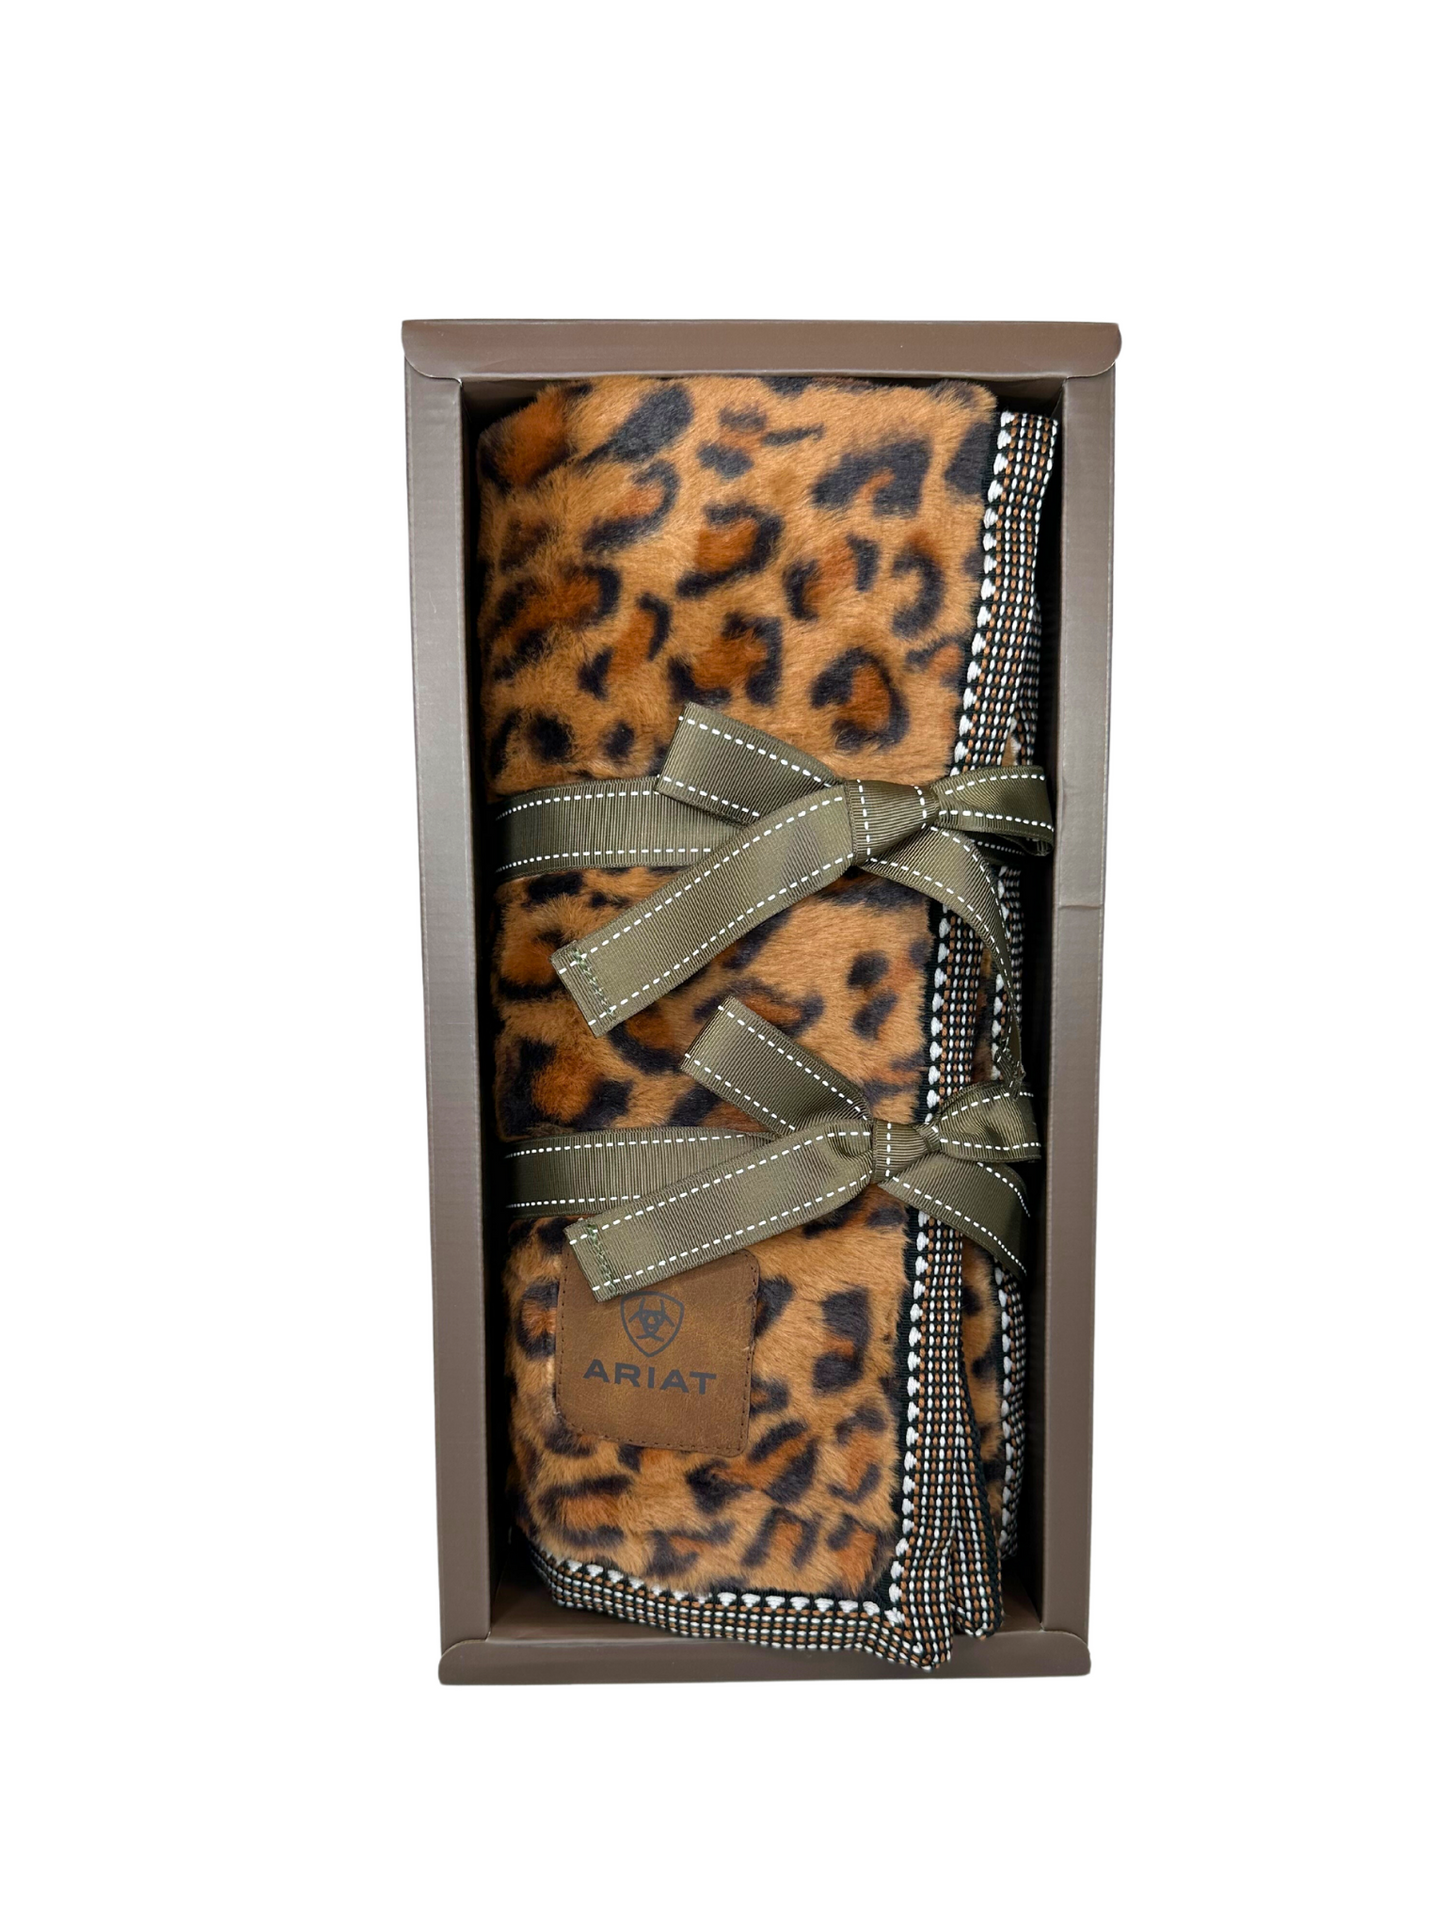 Ariat Leopard Snuggle Blanket